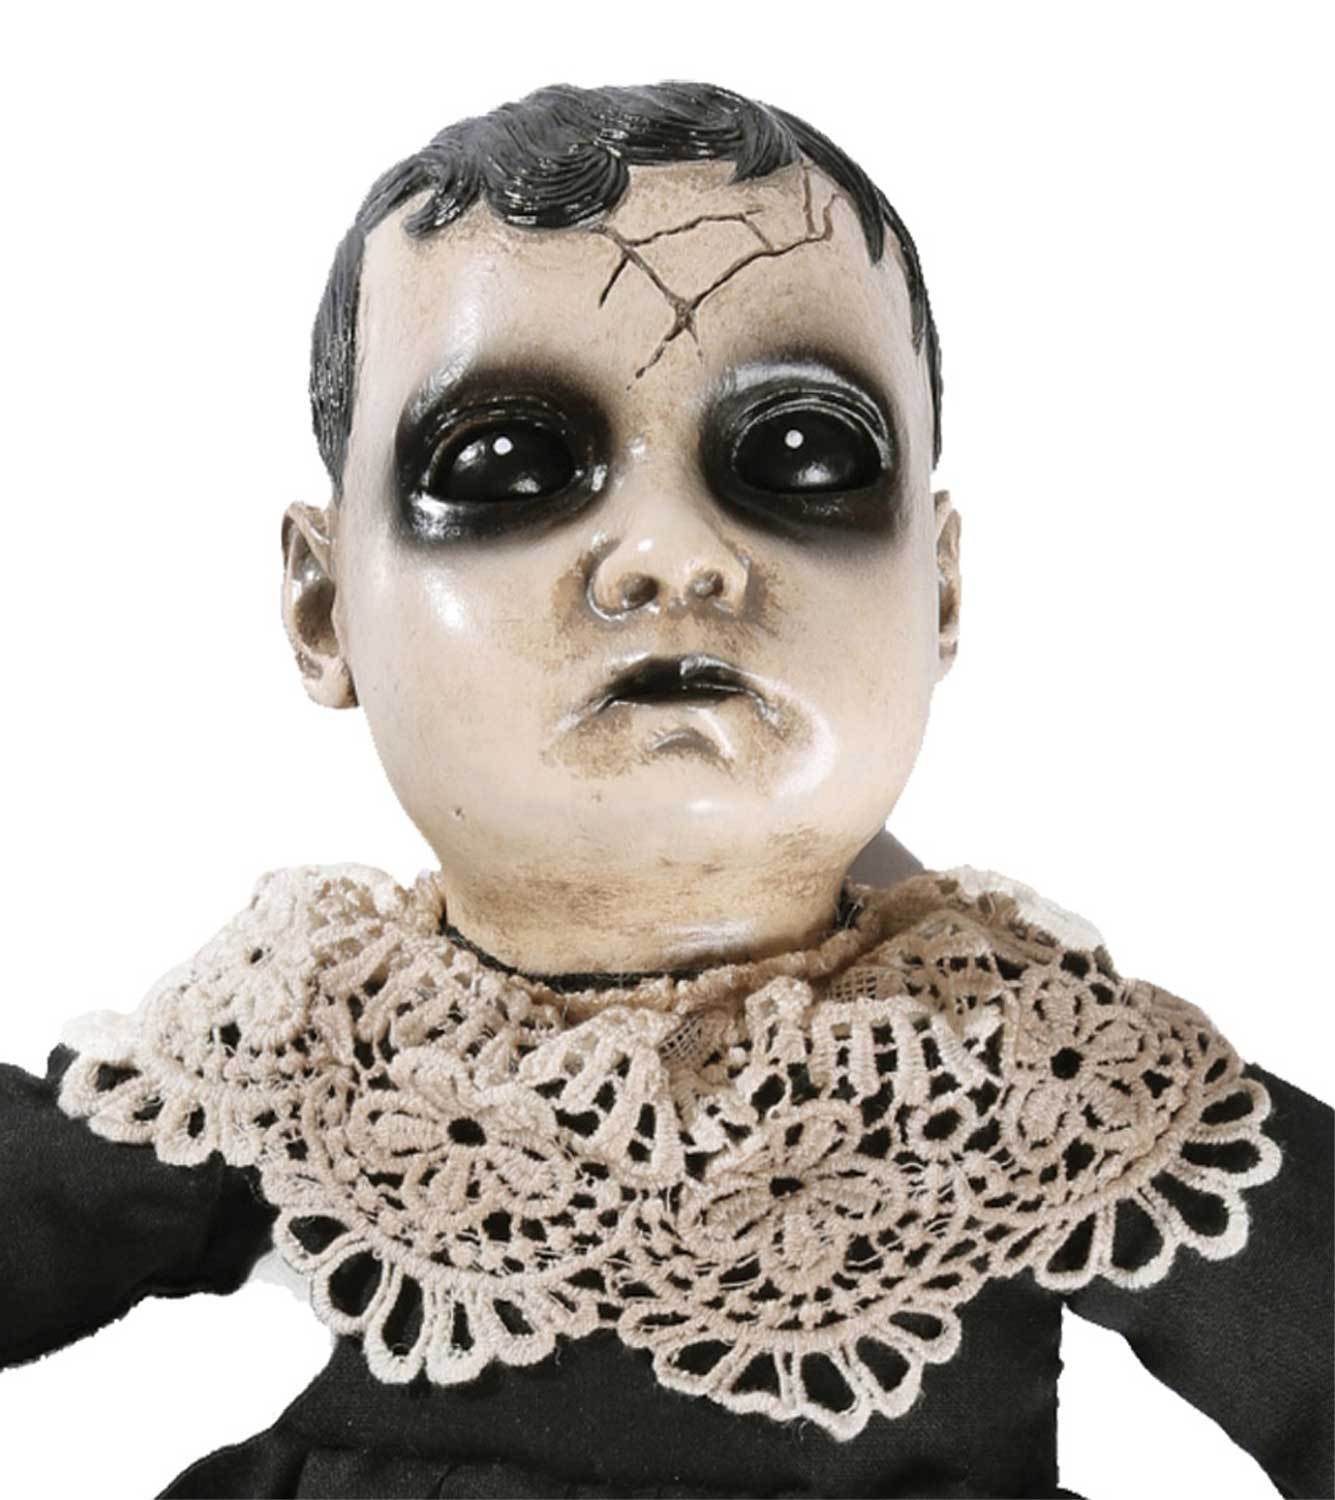 Gothic Creepy Haunted TALKING PRECIOUS BABY DOLL w/ SOUND Horror Prop Decoration